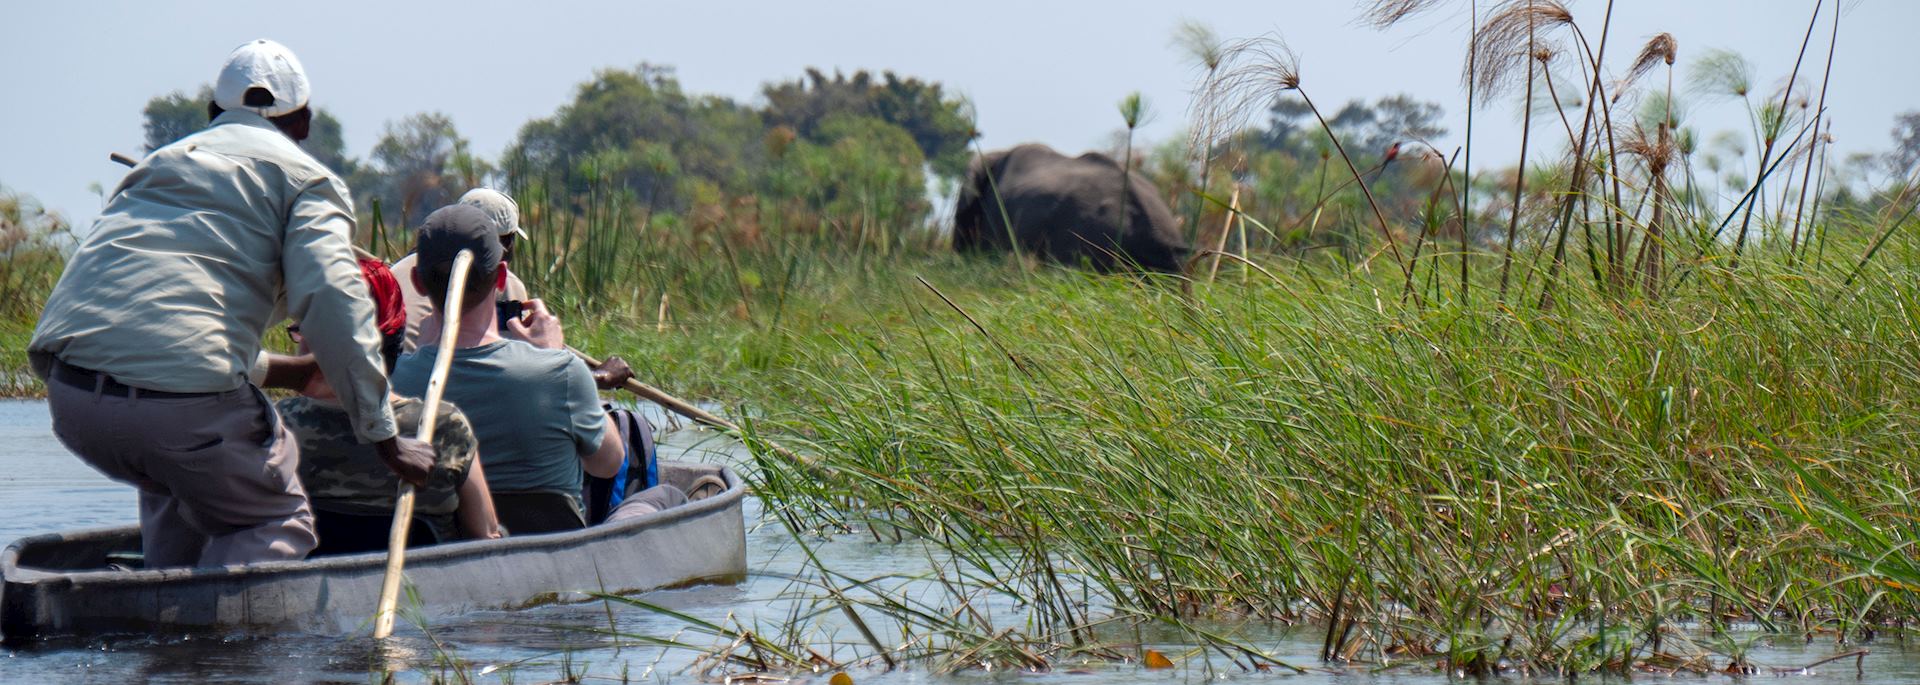 Mokoro trip in the Okavango Delta